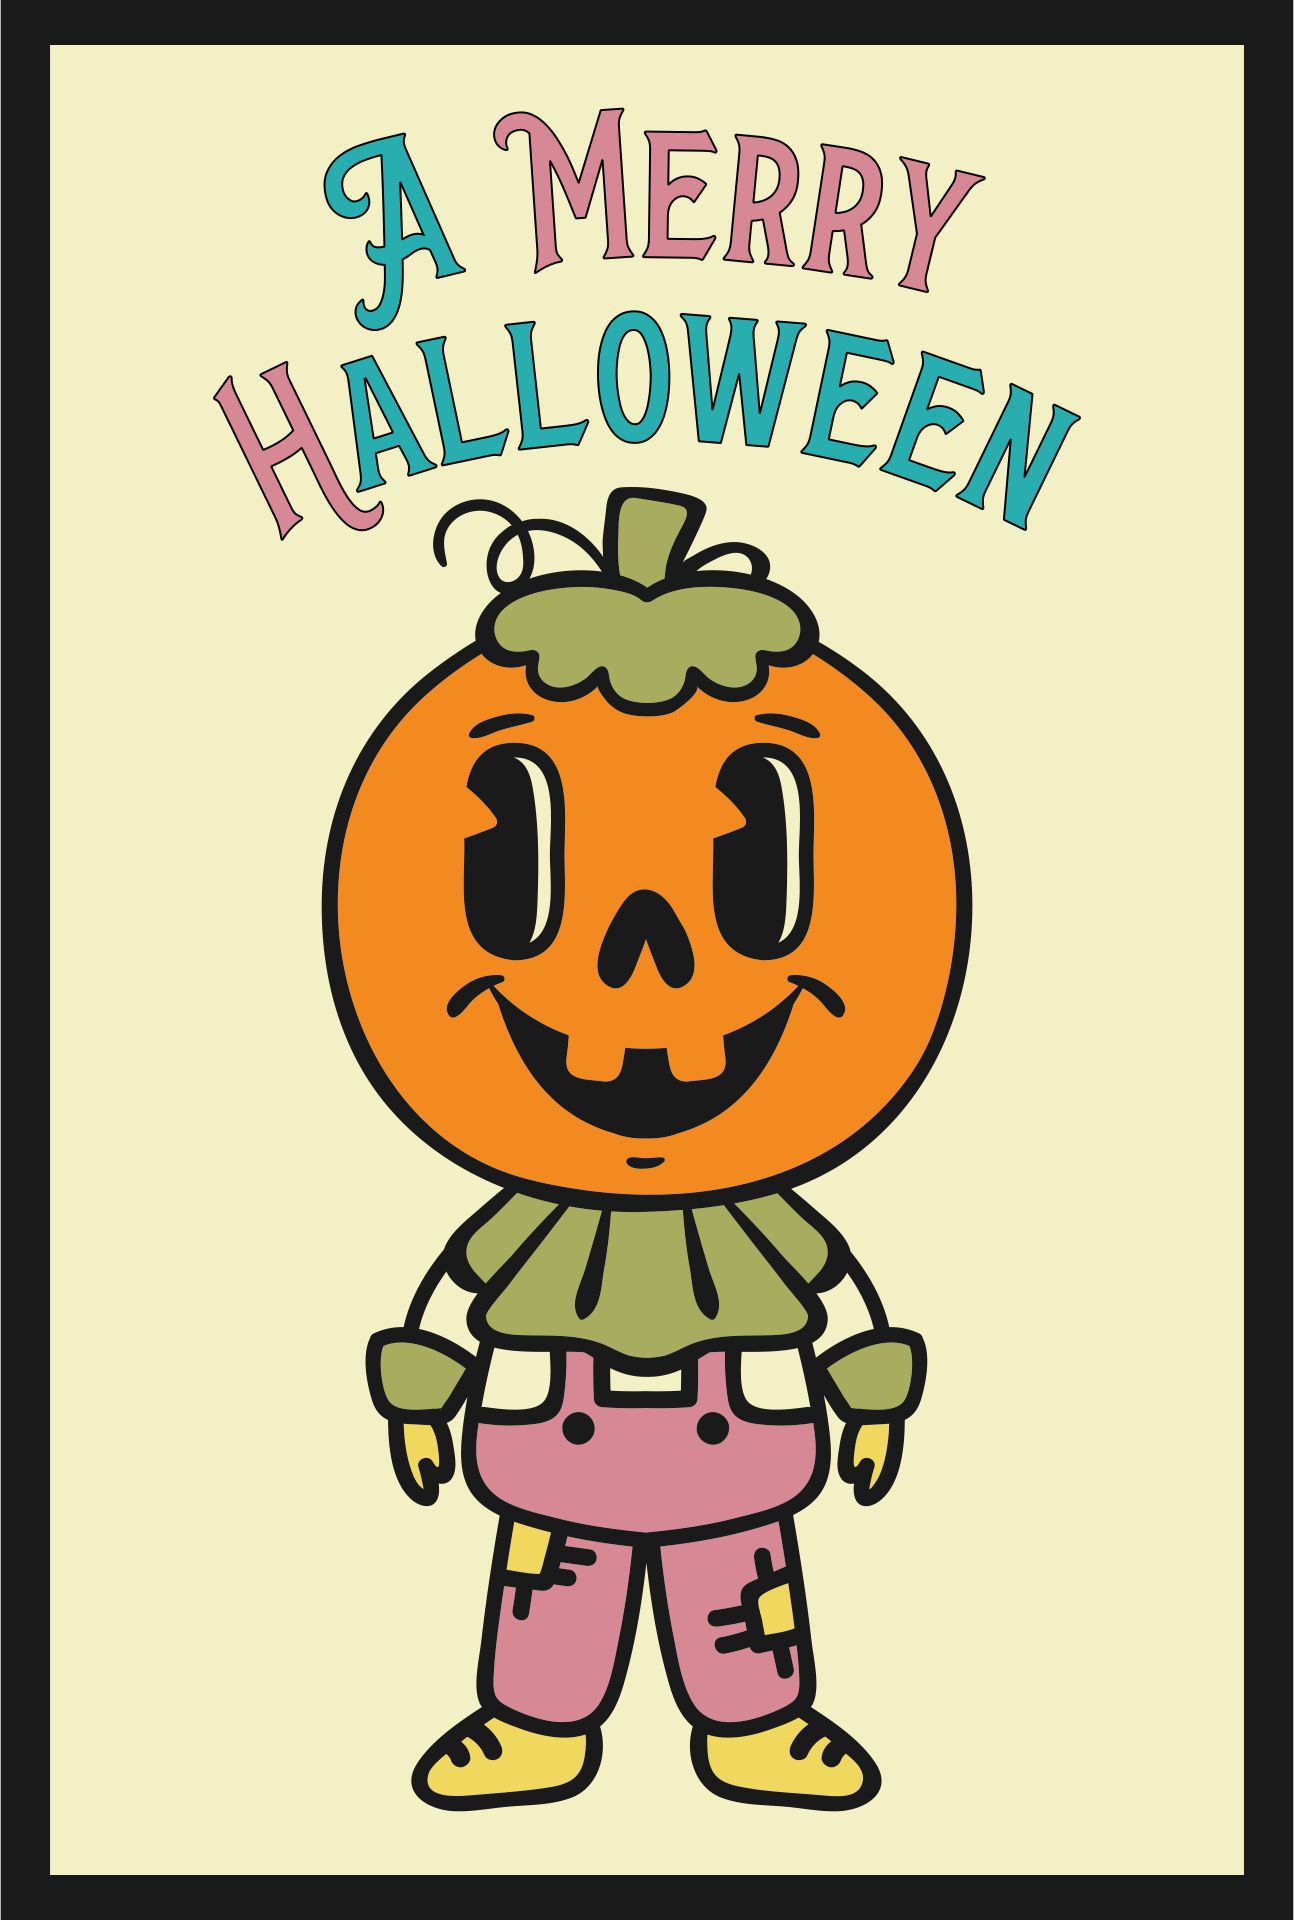 Vintage Halloween Card